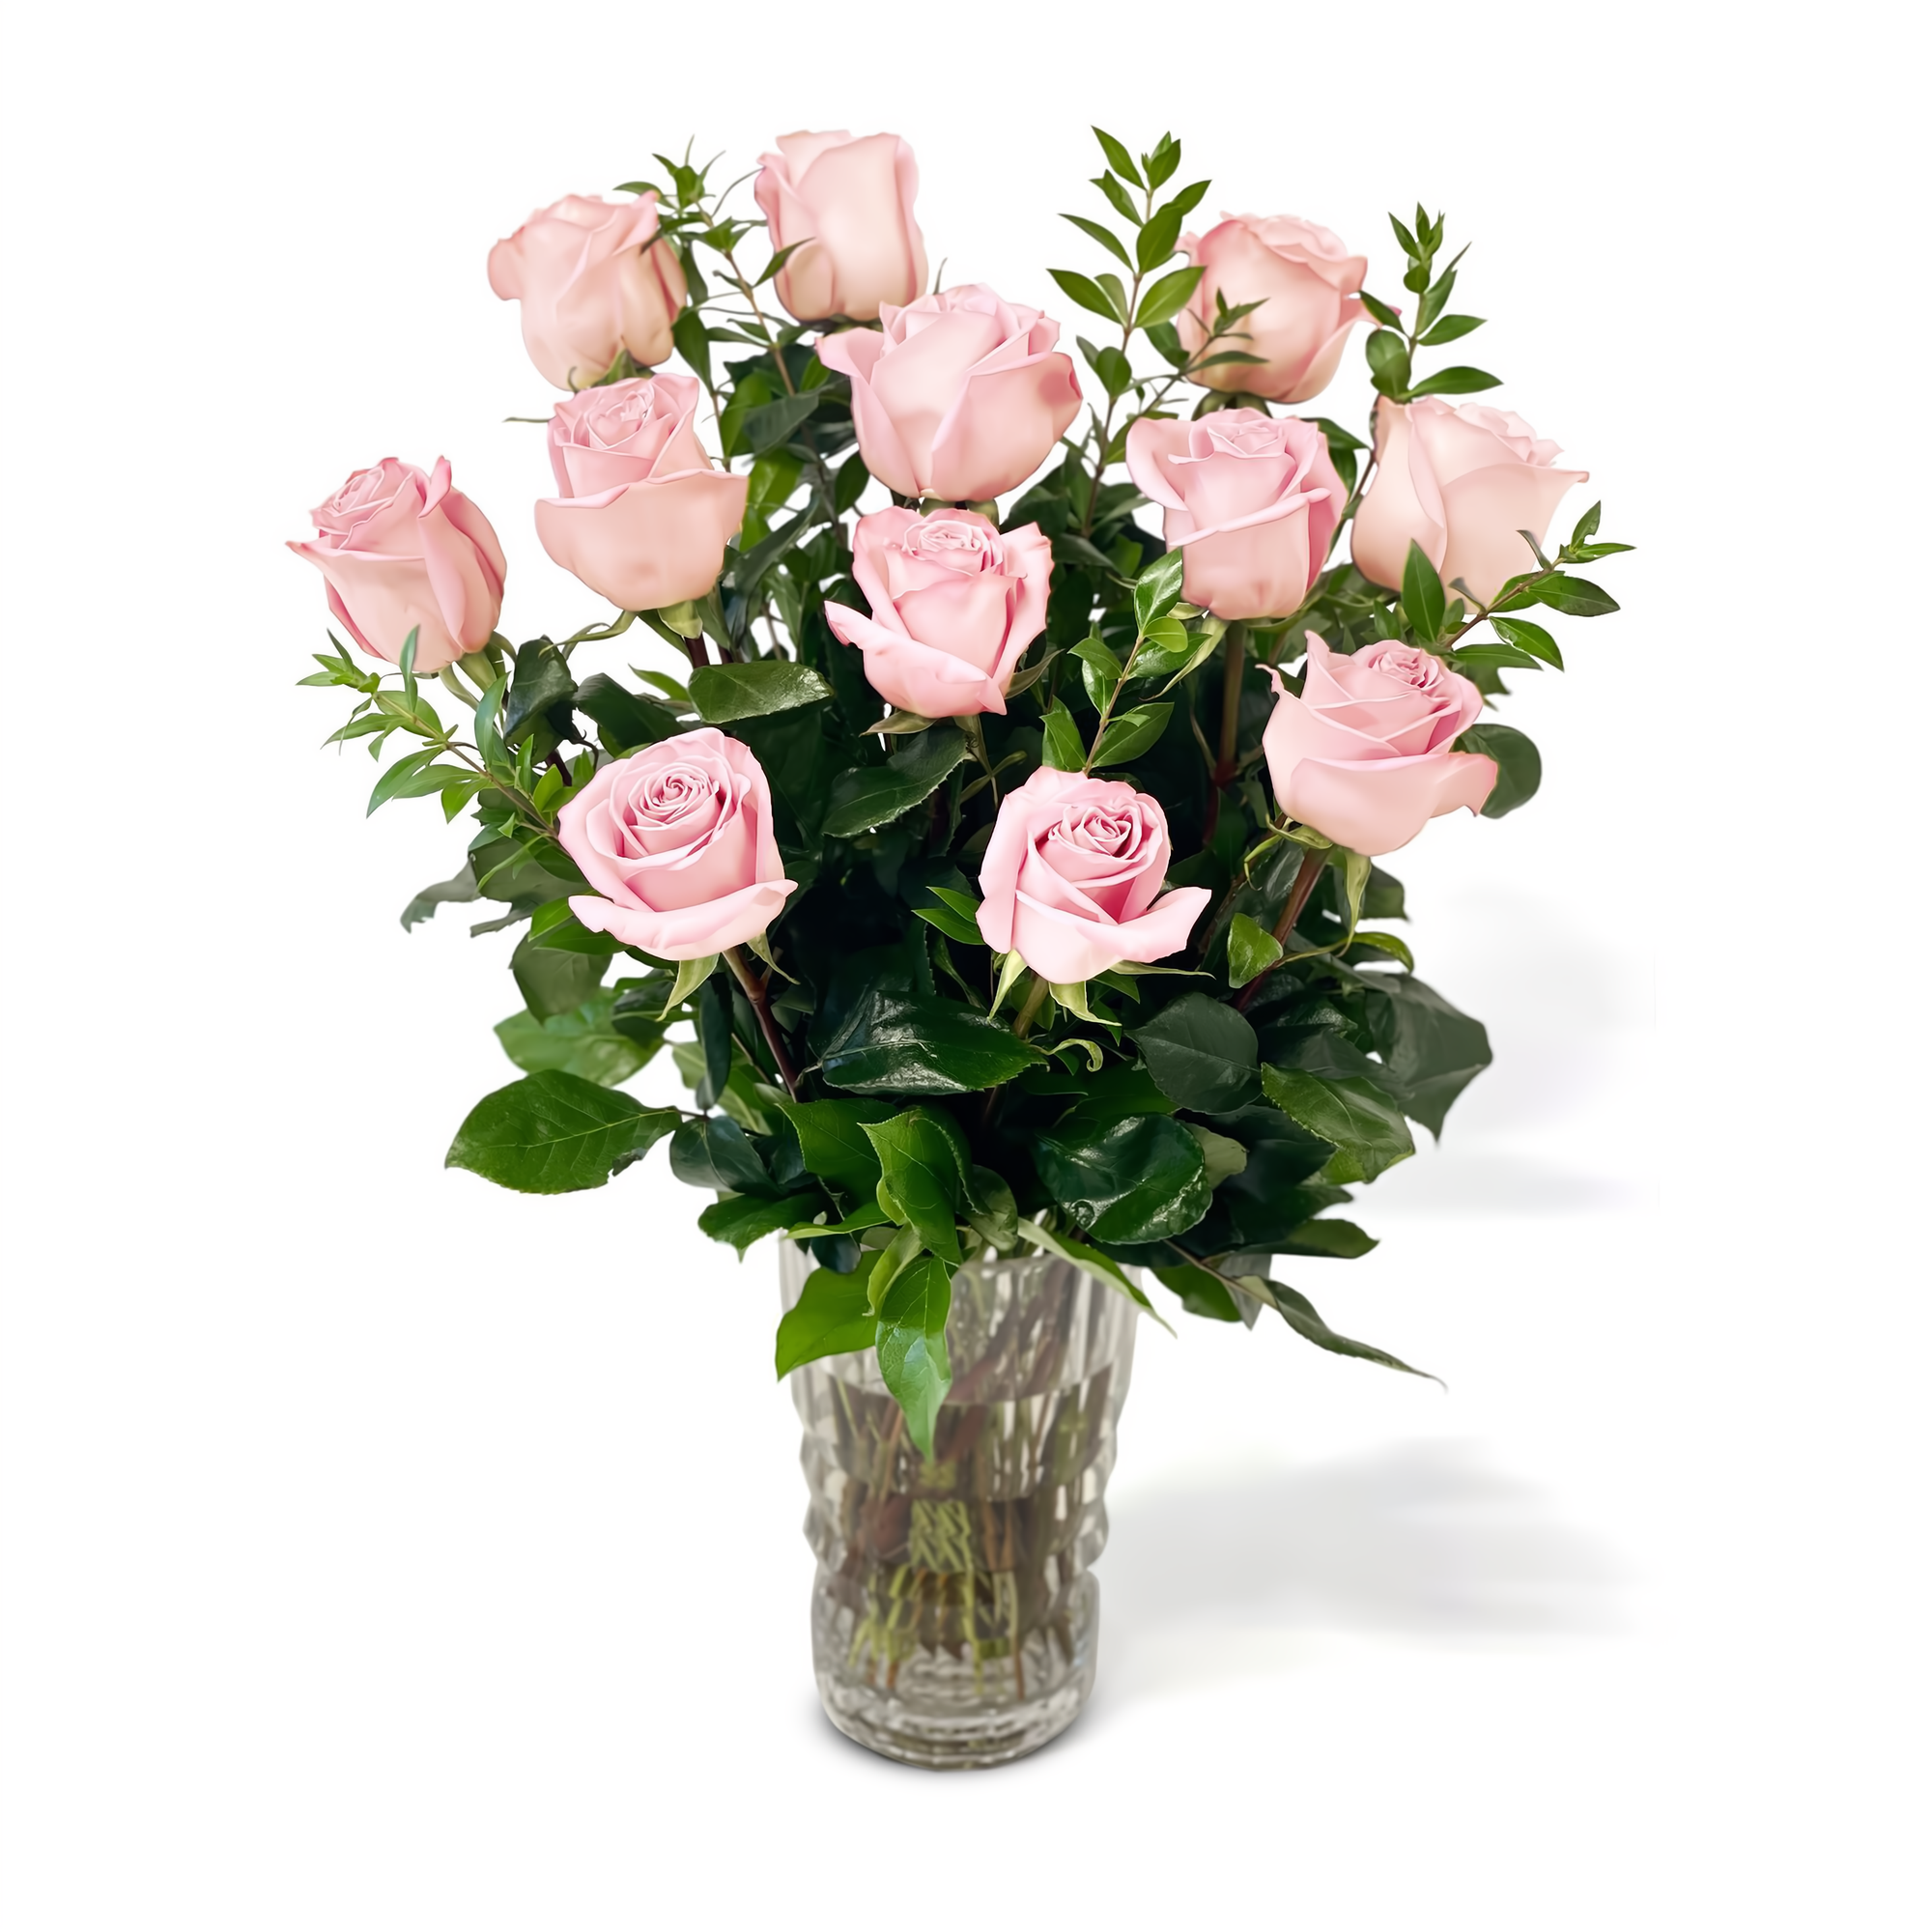 Manhattan Flower Delivery - Fresh Roses in a Crystal Vase | Dozen Light Pink - Roses